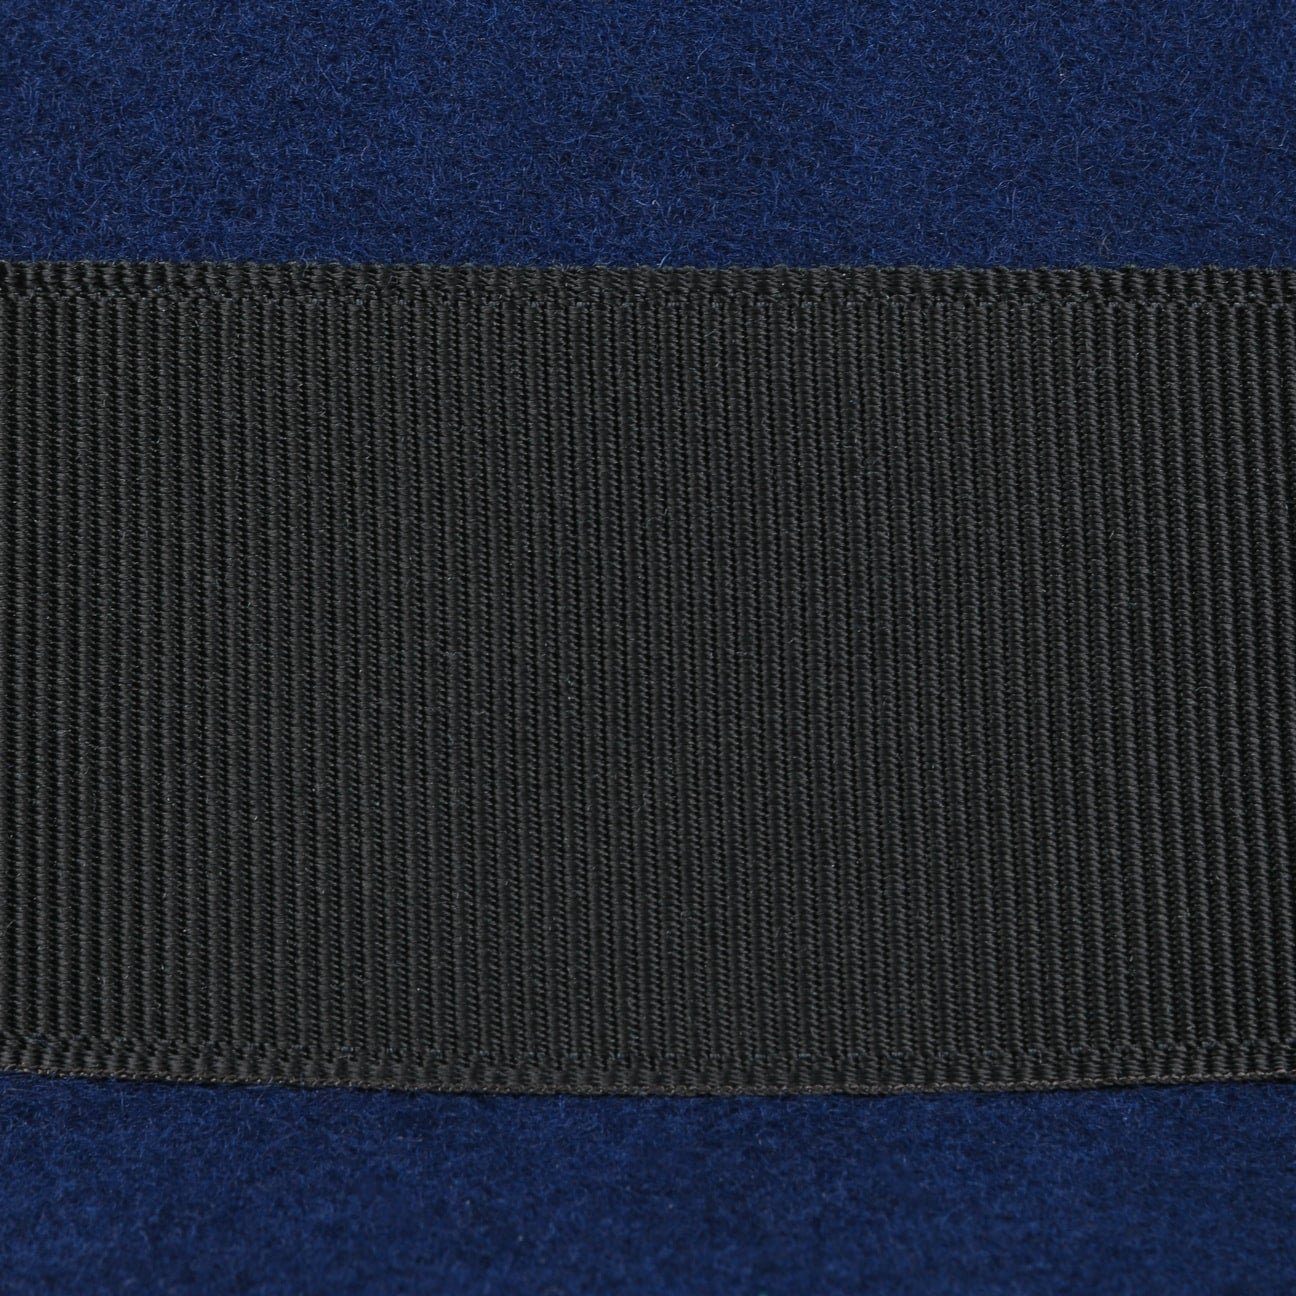 Mayser Trilby (1-St) EU Wollfilzhut Made dunkelblau in the mit Ripsband